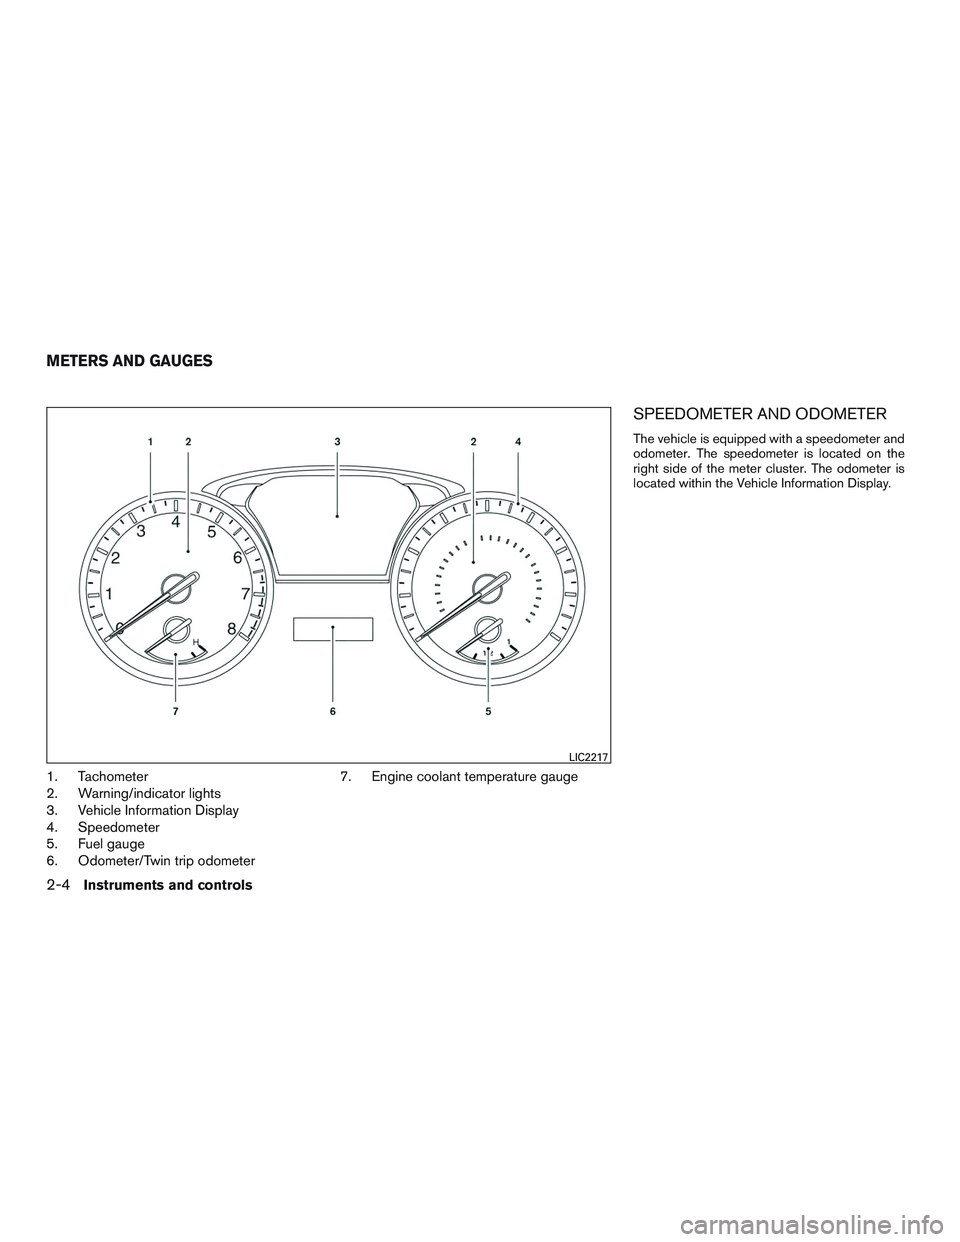 INFINITI QX60 2015  Owners Manual 1. Tachometer
2. Warning/indicator lights
3. Vehicle Information Display
4. Speedometer
5. Fuel gauge
6. Odometer/Twin trip odometer7. Engine coolant temperature gauge
SPEEDOMETER AND ODOMETER
The veh